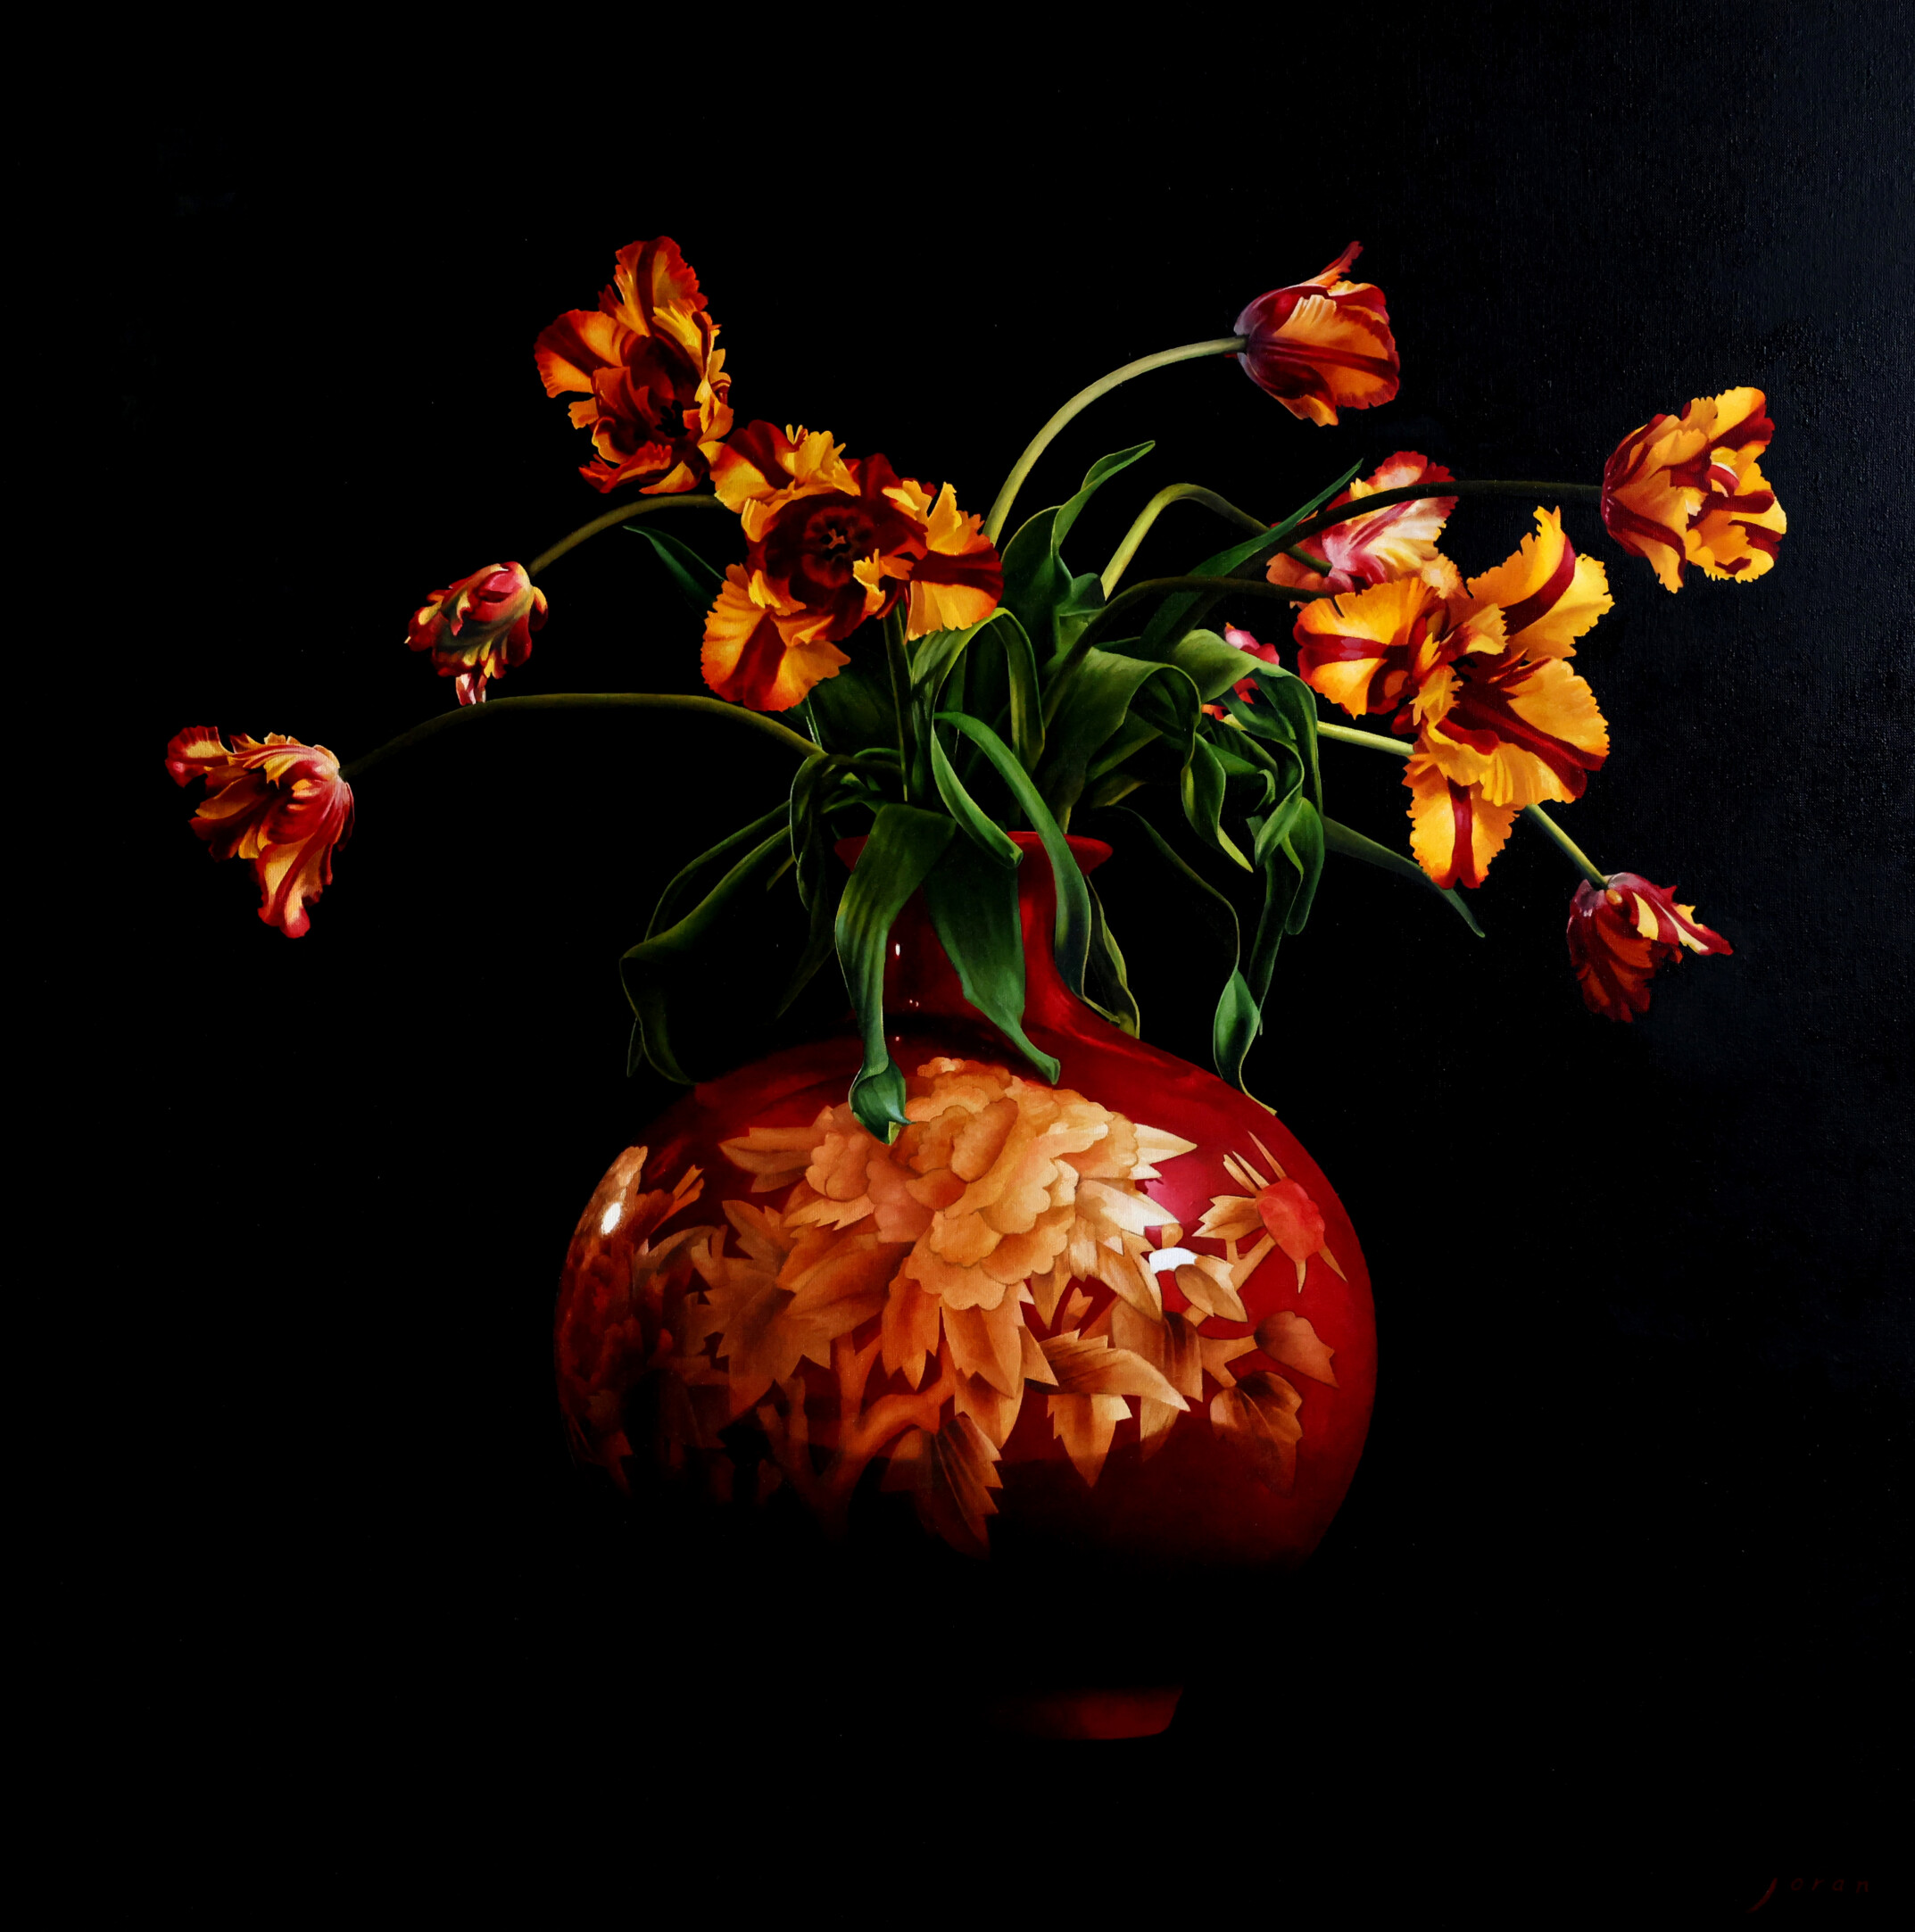 Van streek Kunstmatig Verbergen Rode vaas met Tulpen - Galerie Bonnard